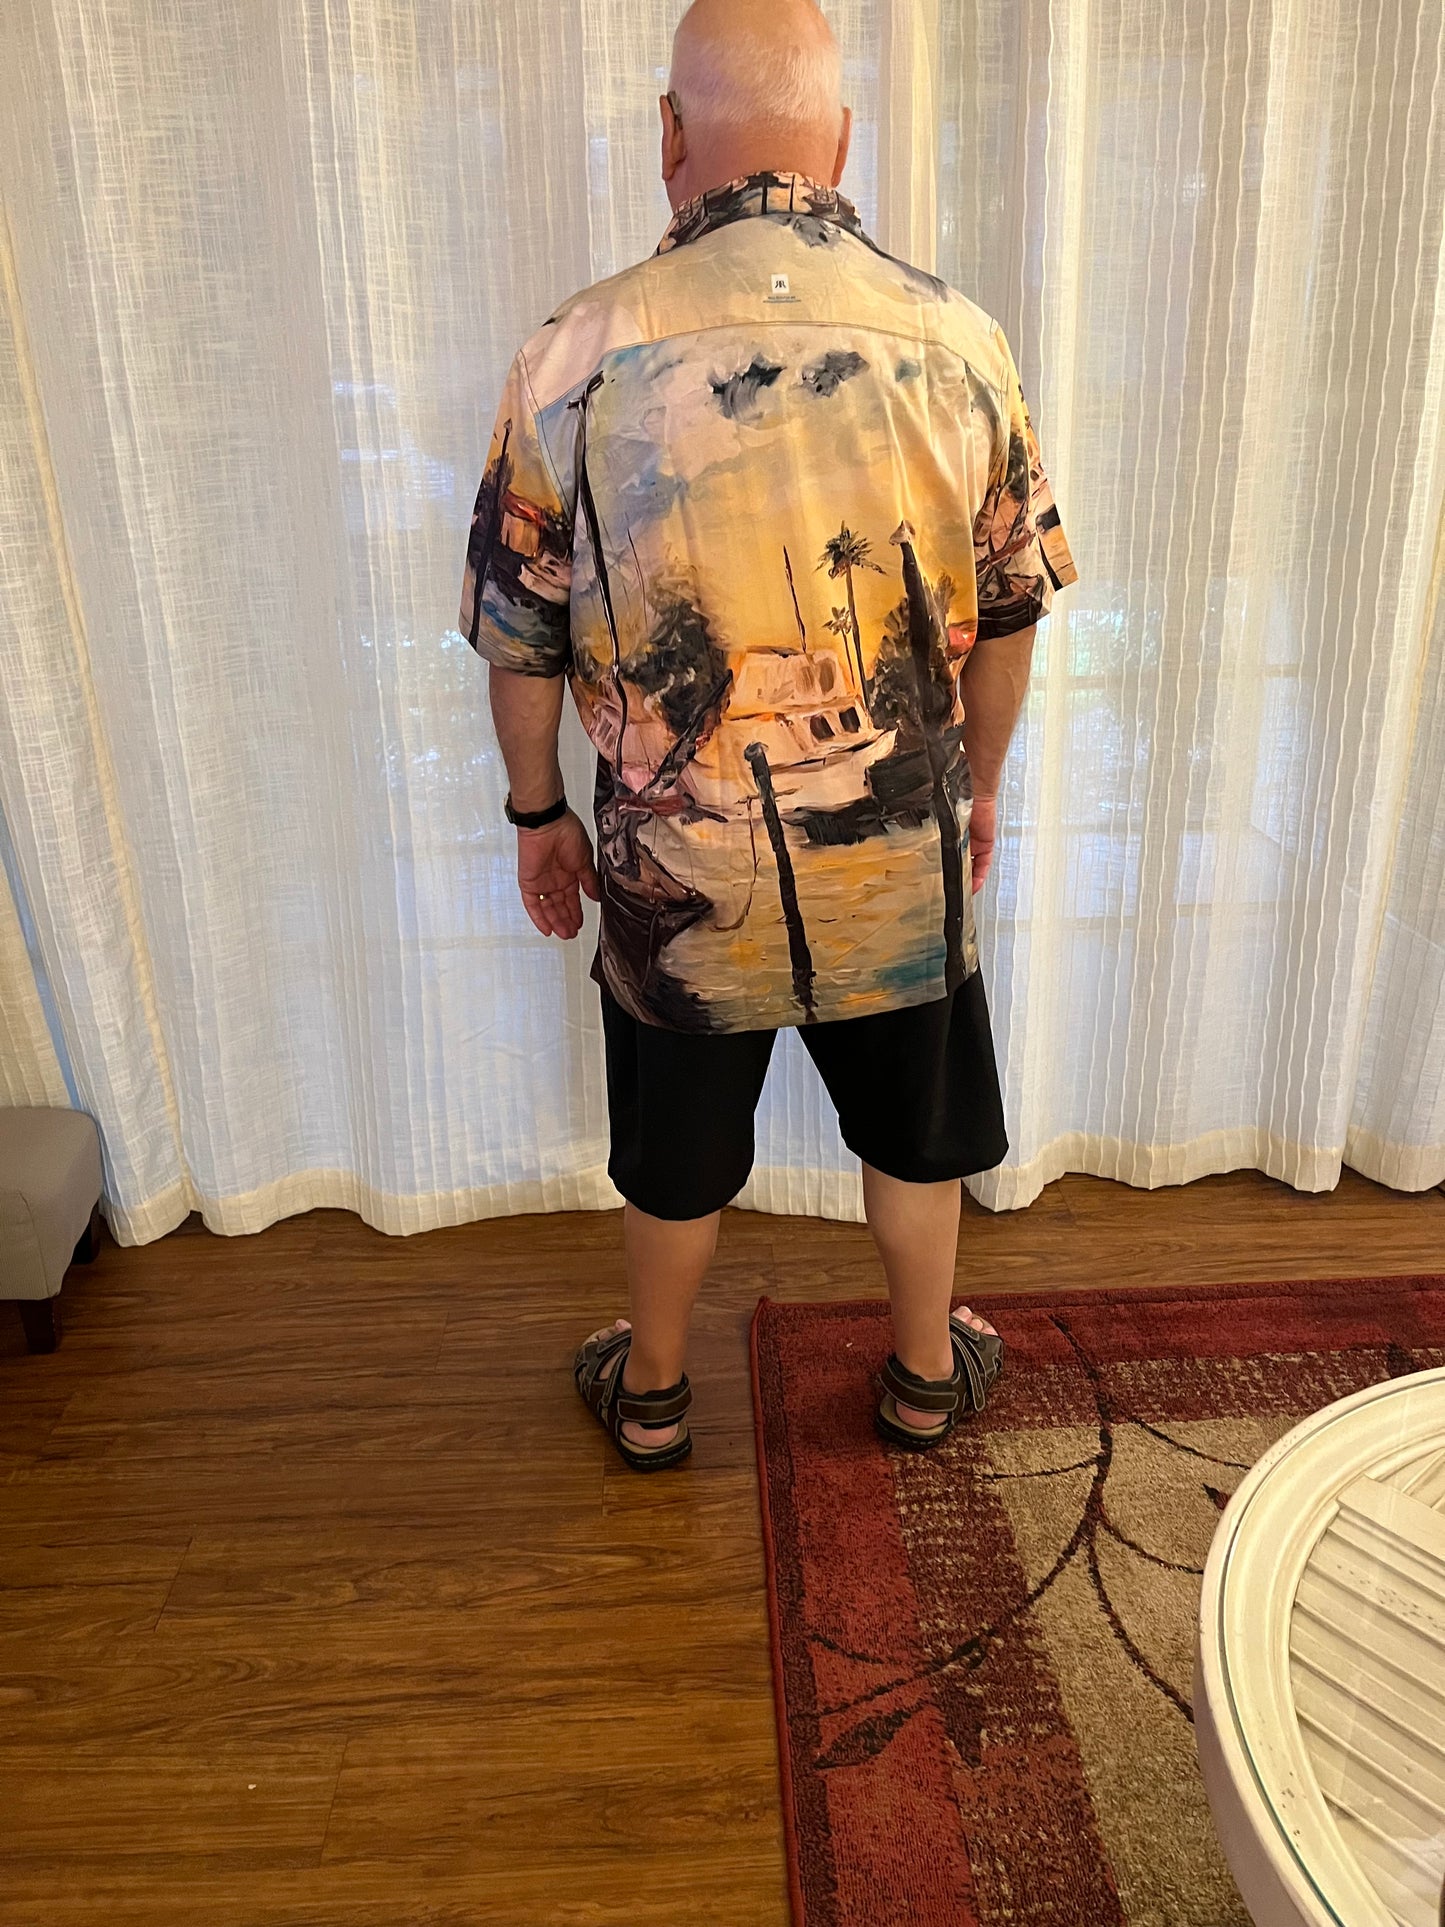 Jeanne's Harbour (Veleros) Camisa hawaiana para hombre